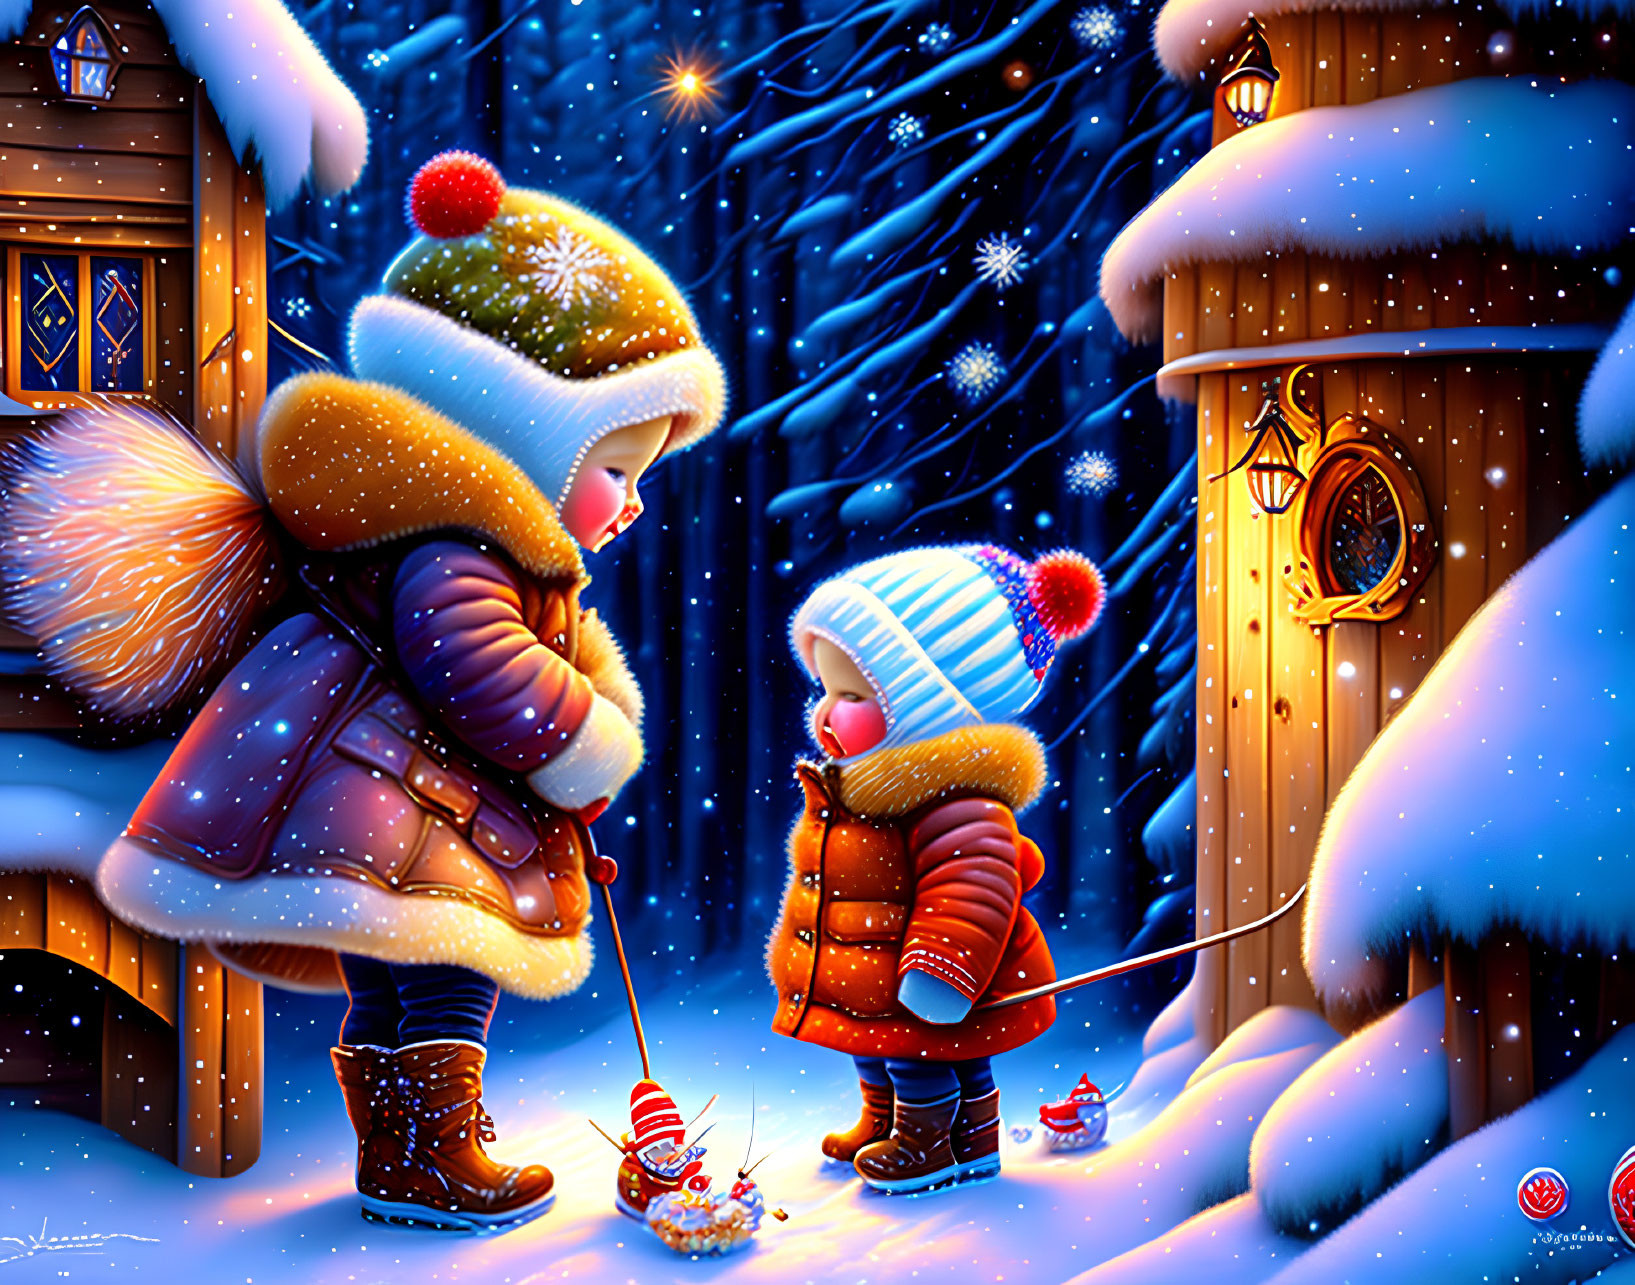 Children in winter clothing by warmly lit house in snowy scene